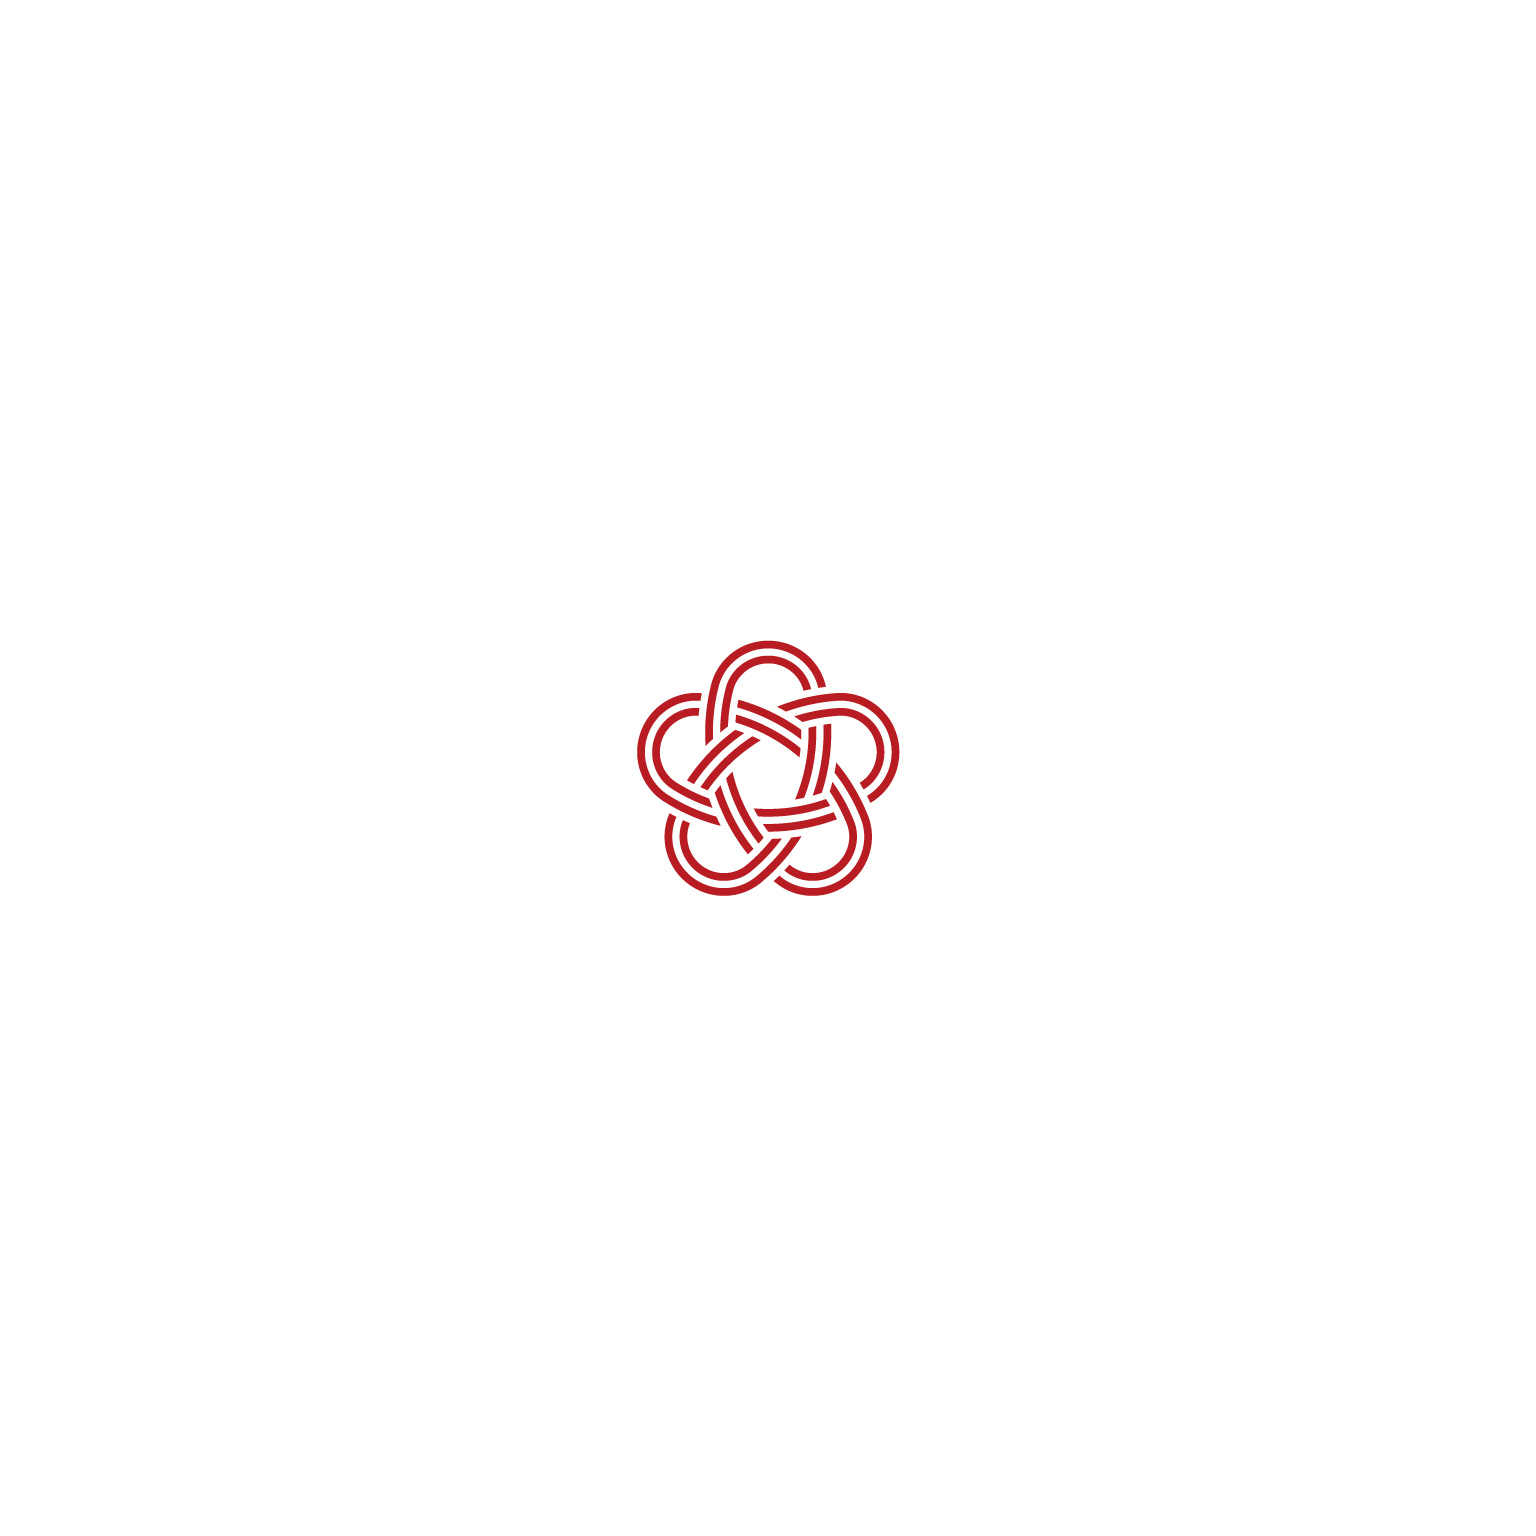 Japanese Culture & Style Logo